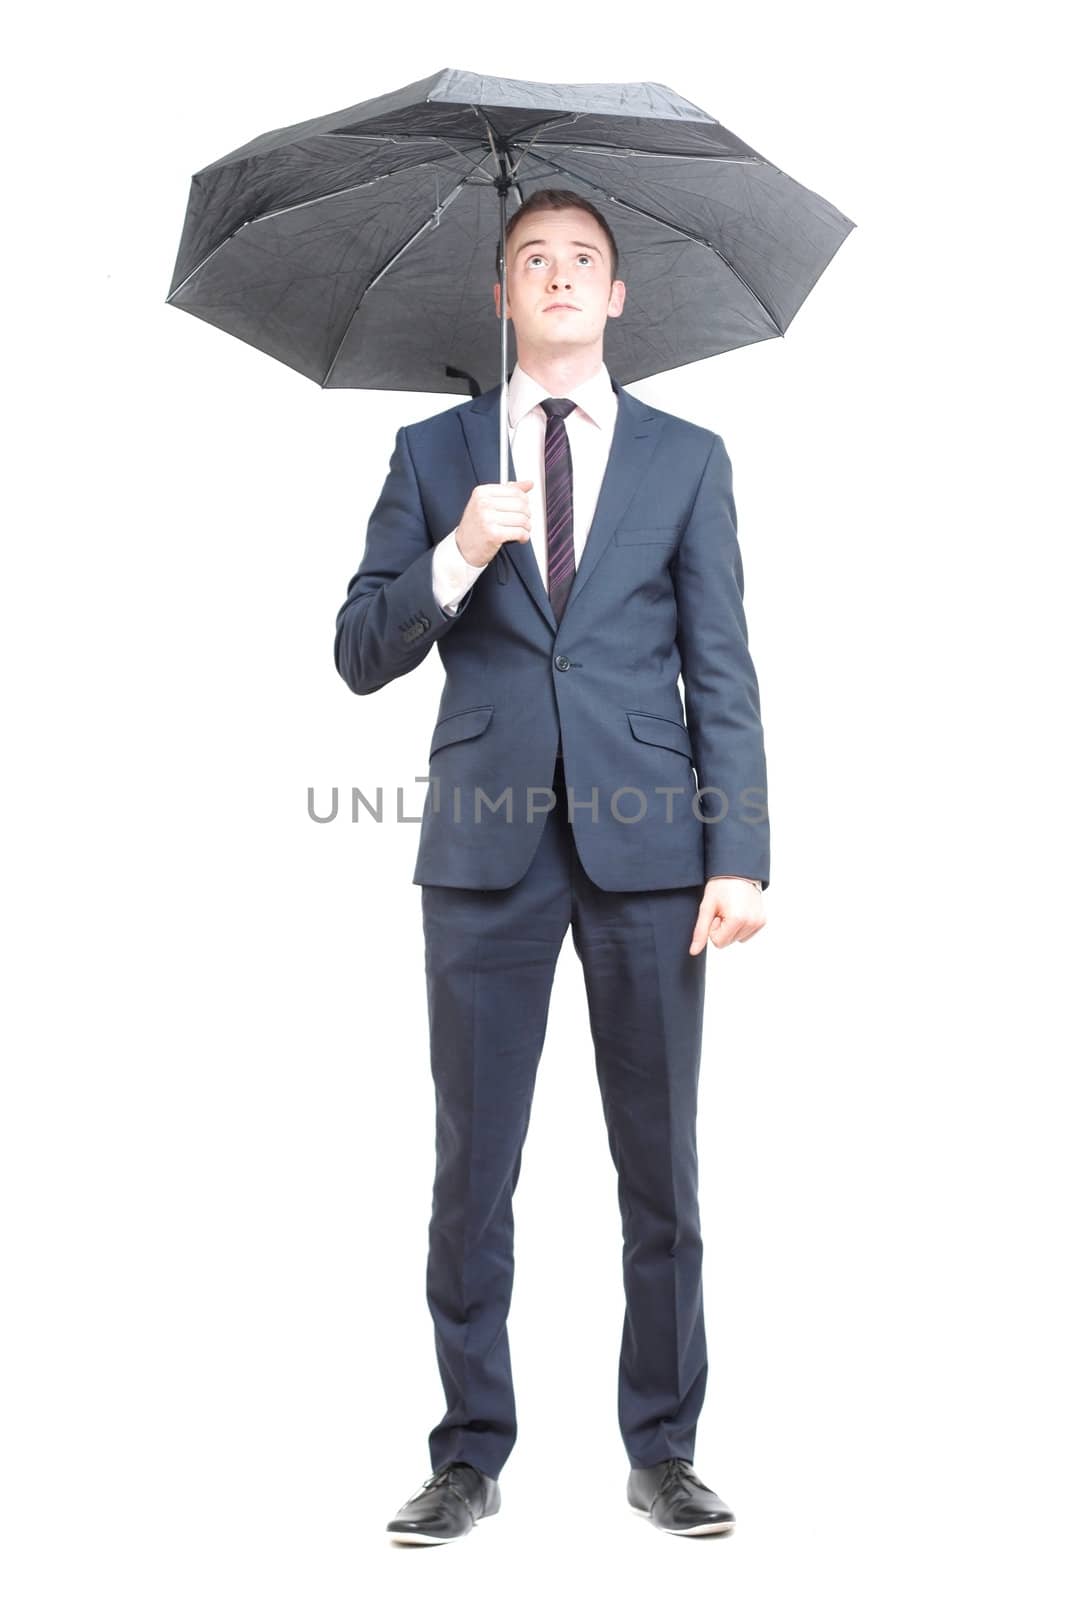 Business man under umbrella by leeser